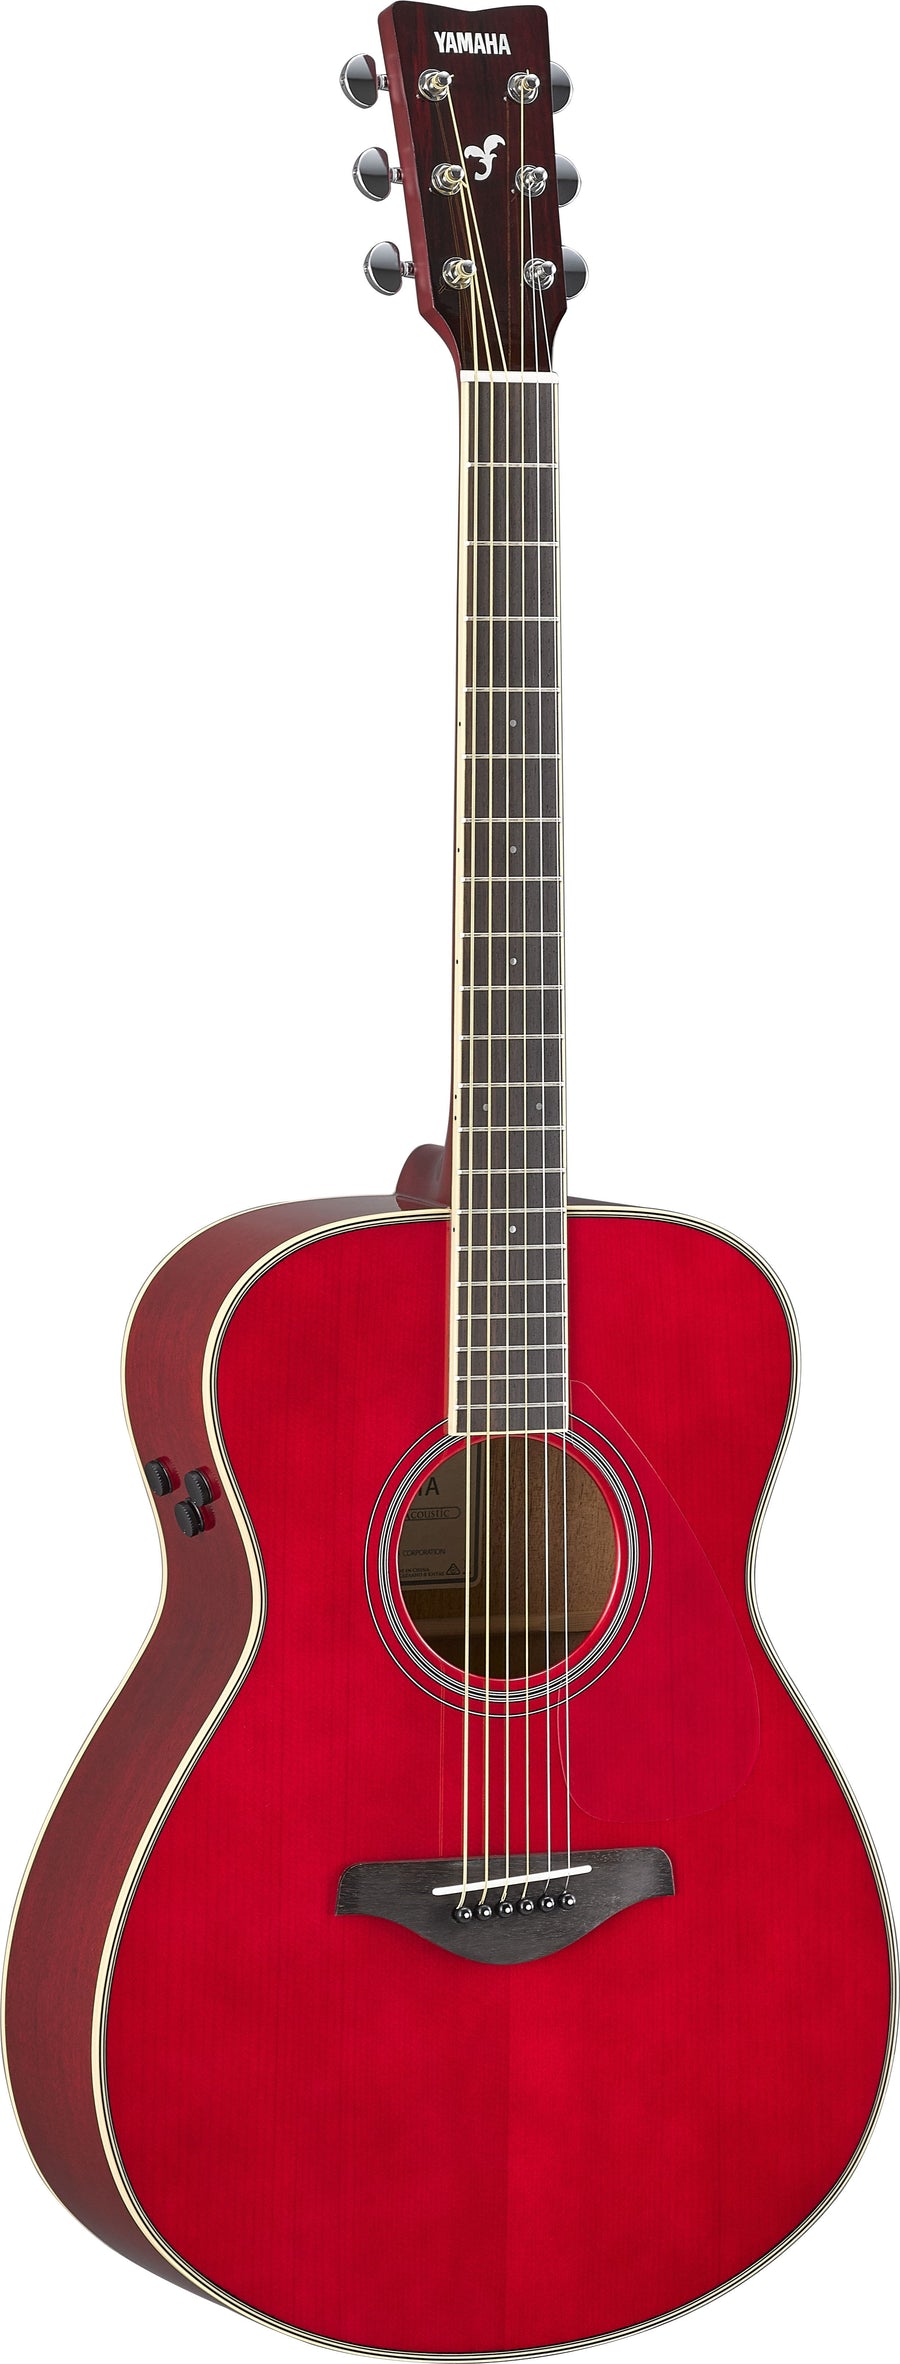 Yamaha FS-TA TransAcoustic Guitar Ruby Red